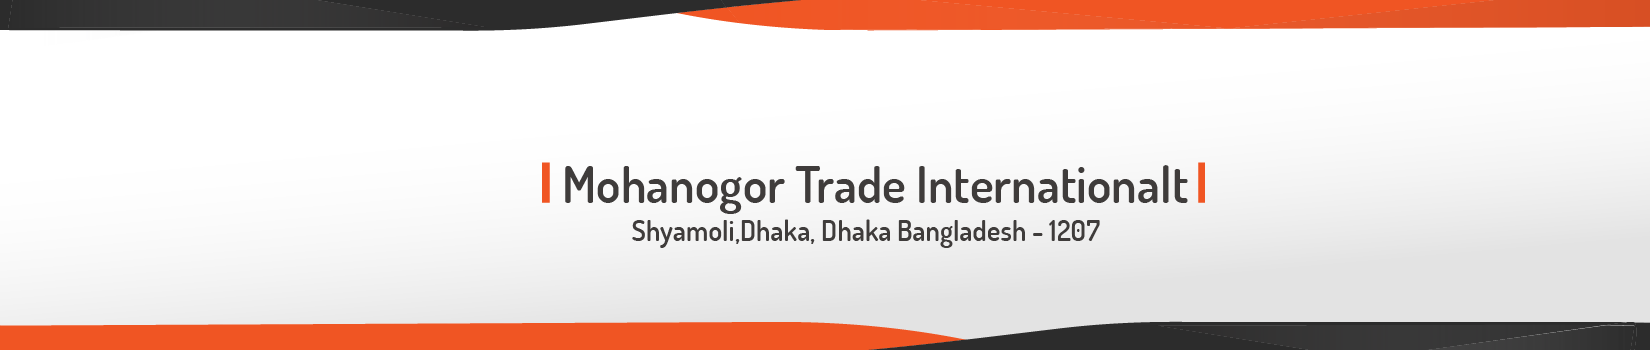 Mohanogor Trade International